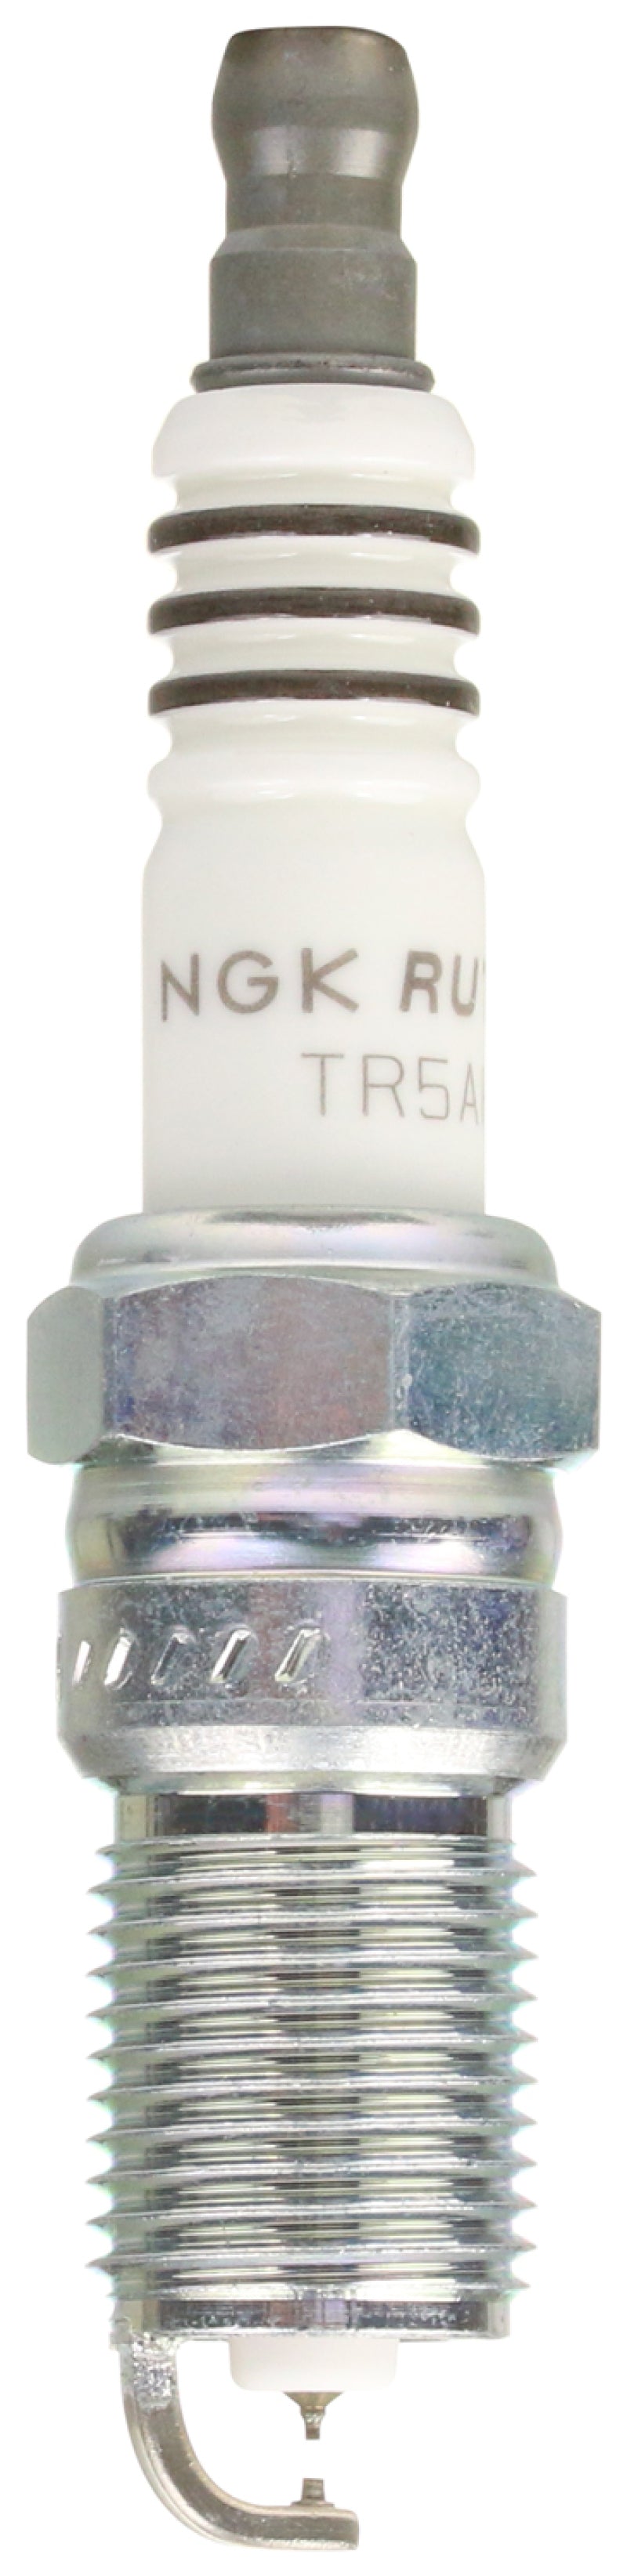 NGK Ruthenium HX Spark Plug Box of 4 (TR5AHX) -  Shop now at Performance Car Parts